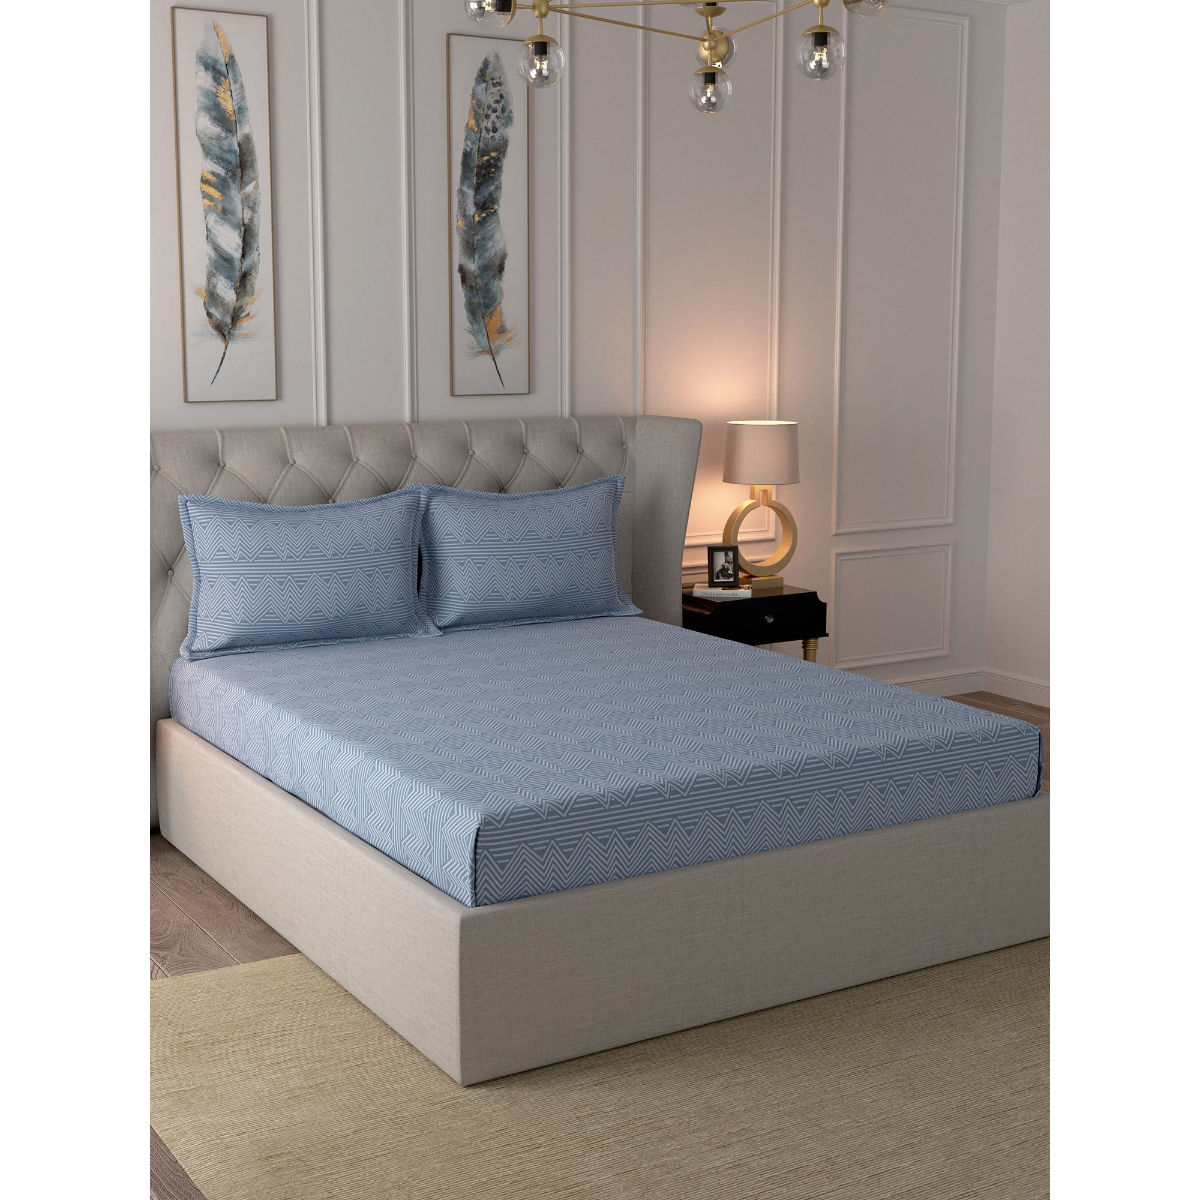 Inhouse by Maspar Glam Craze Blue Print 144TC Cotton Double Bed Sheet With 2 Pillow Covers